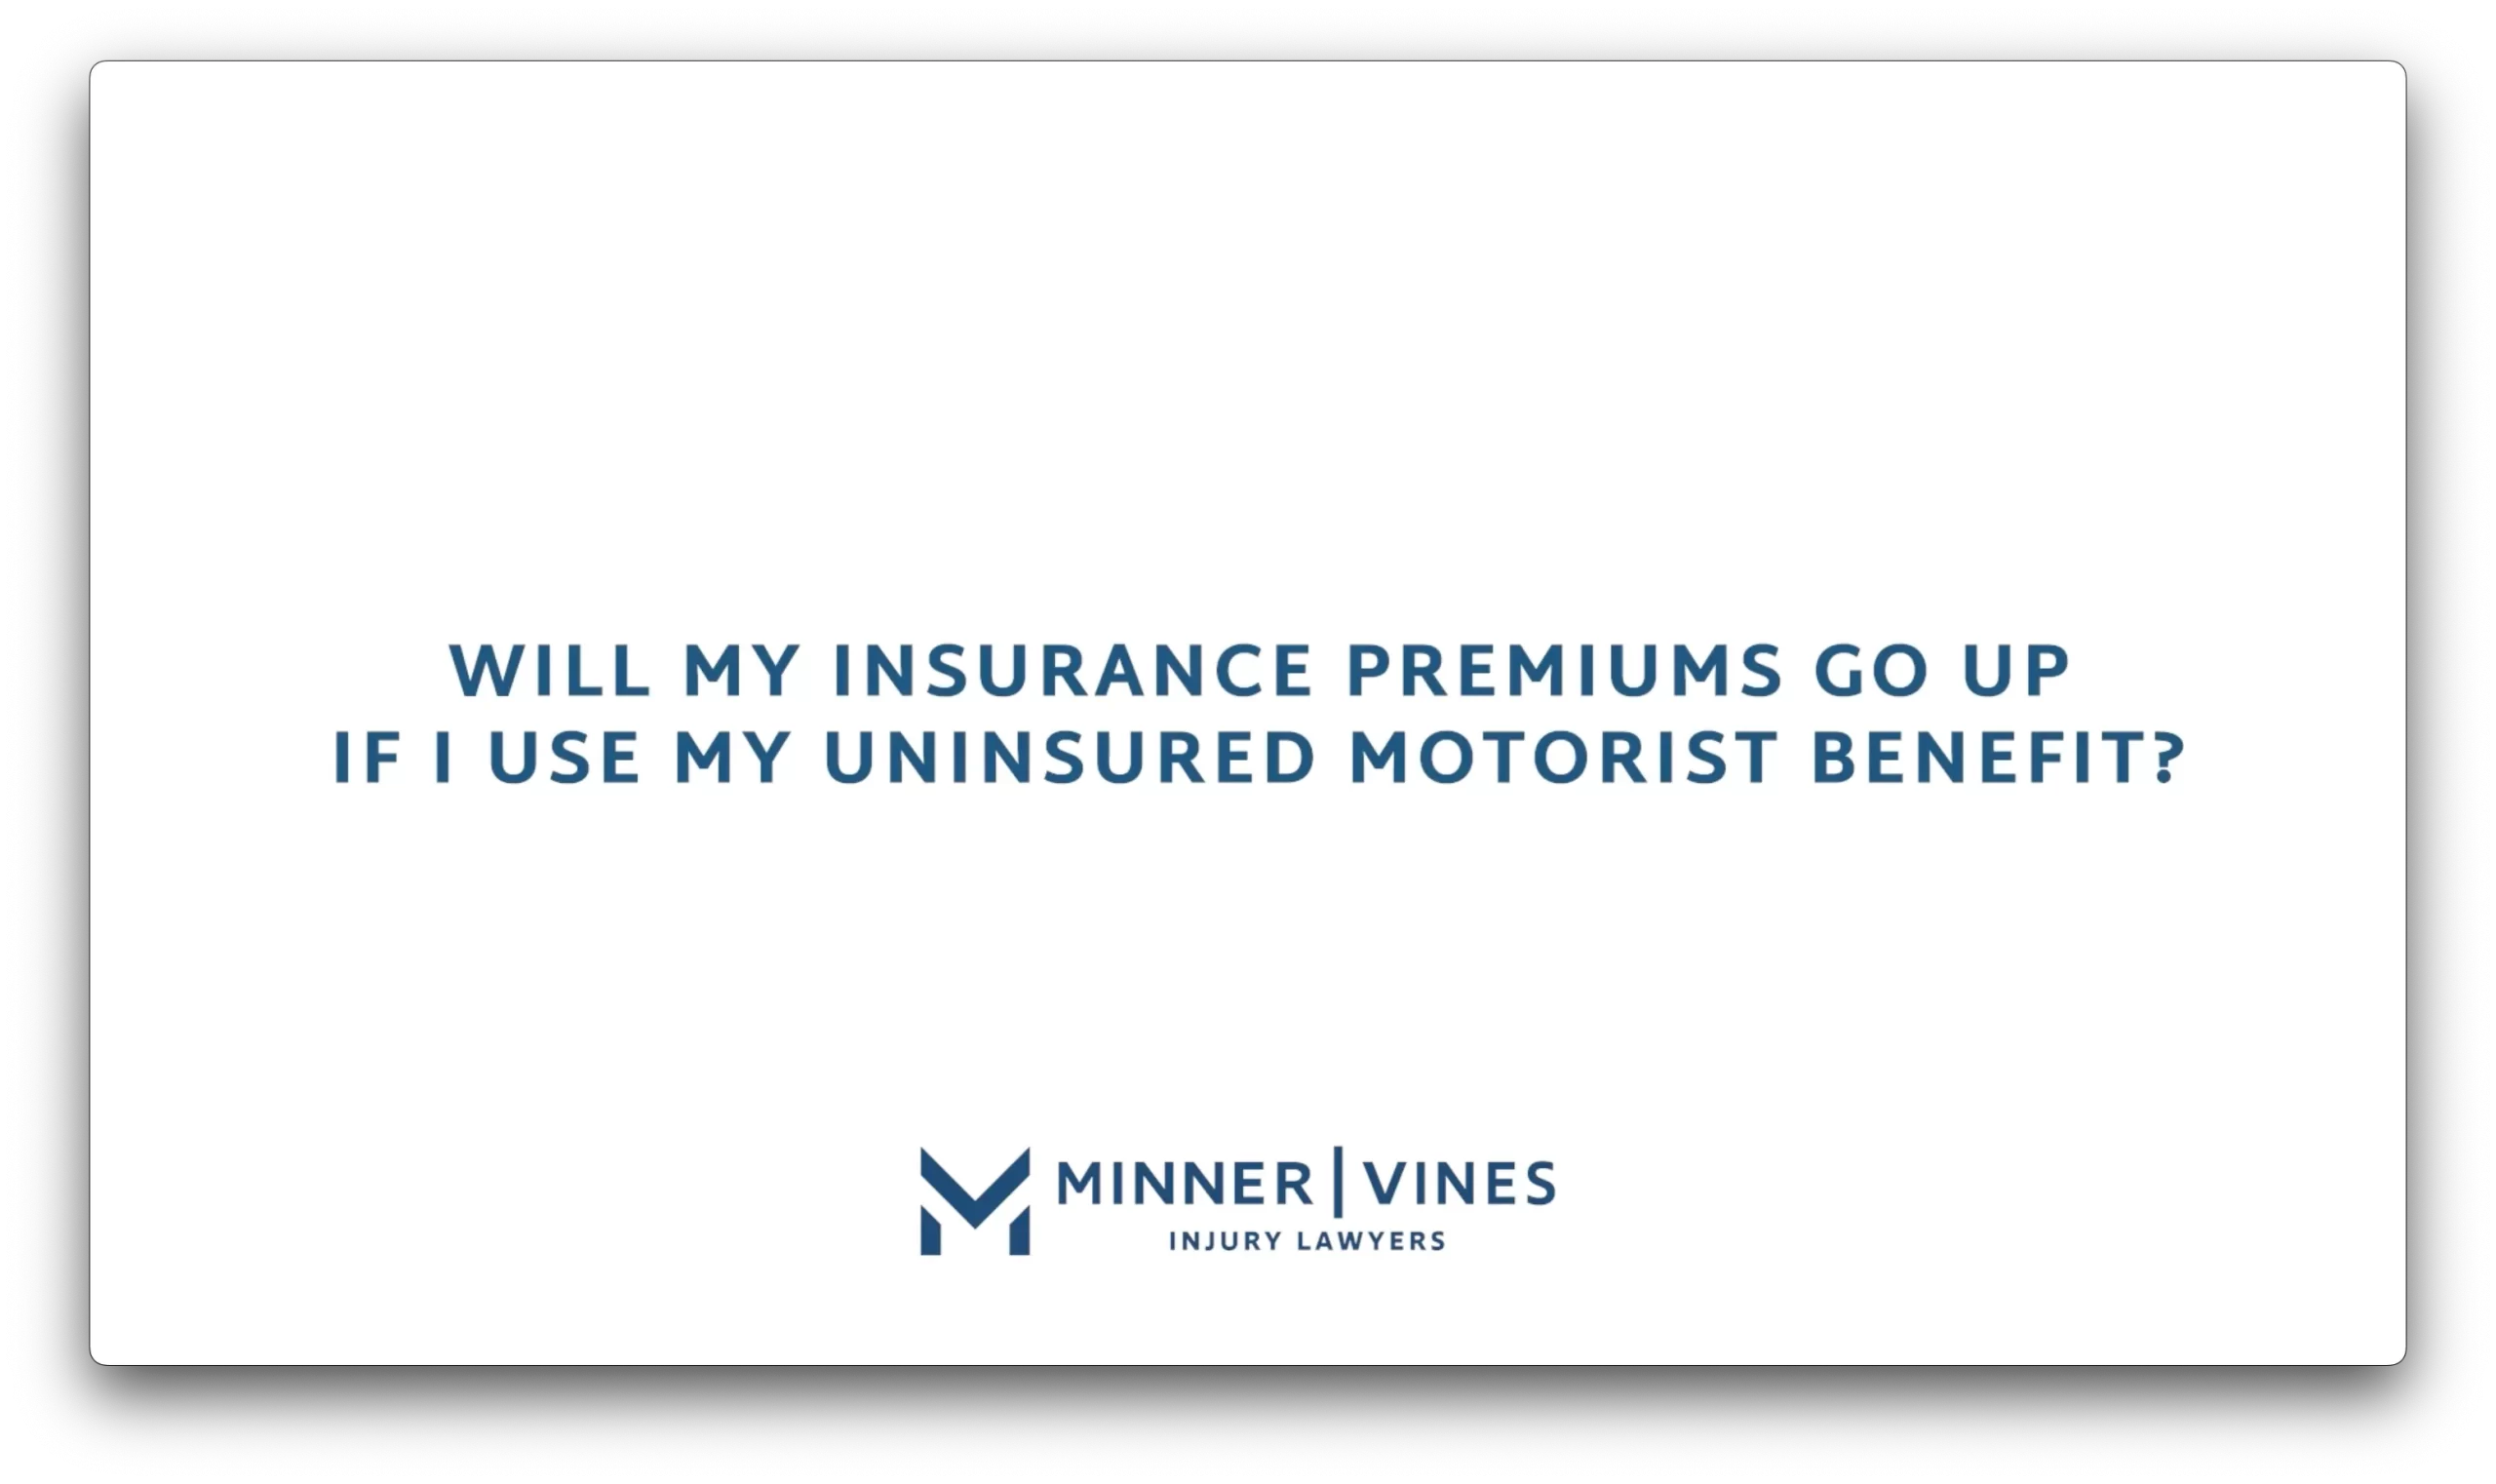 Will my insurance premiums go up if I use my uninsured motorist benefit?